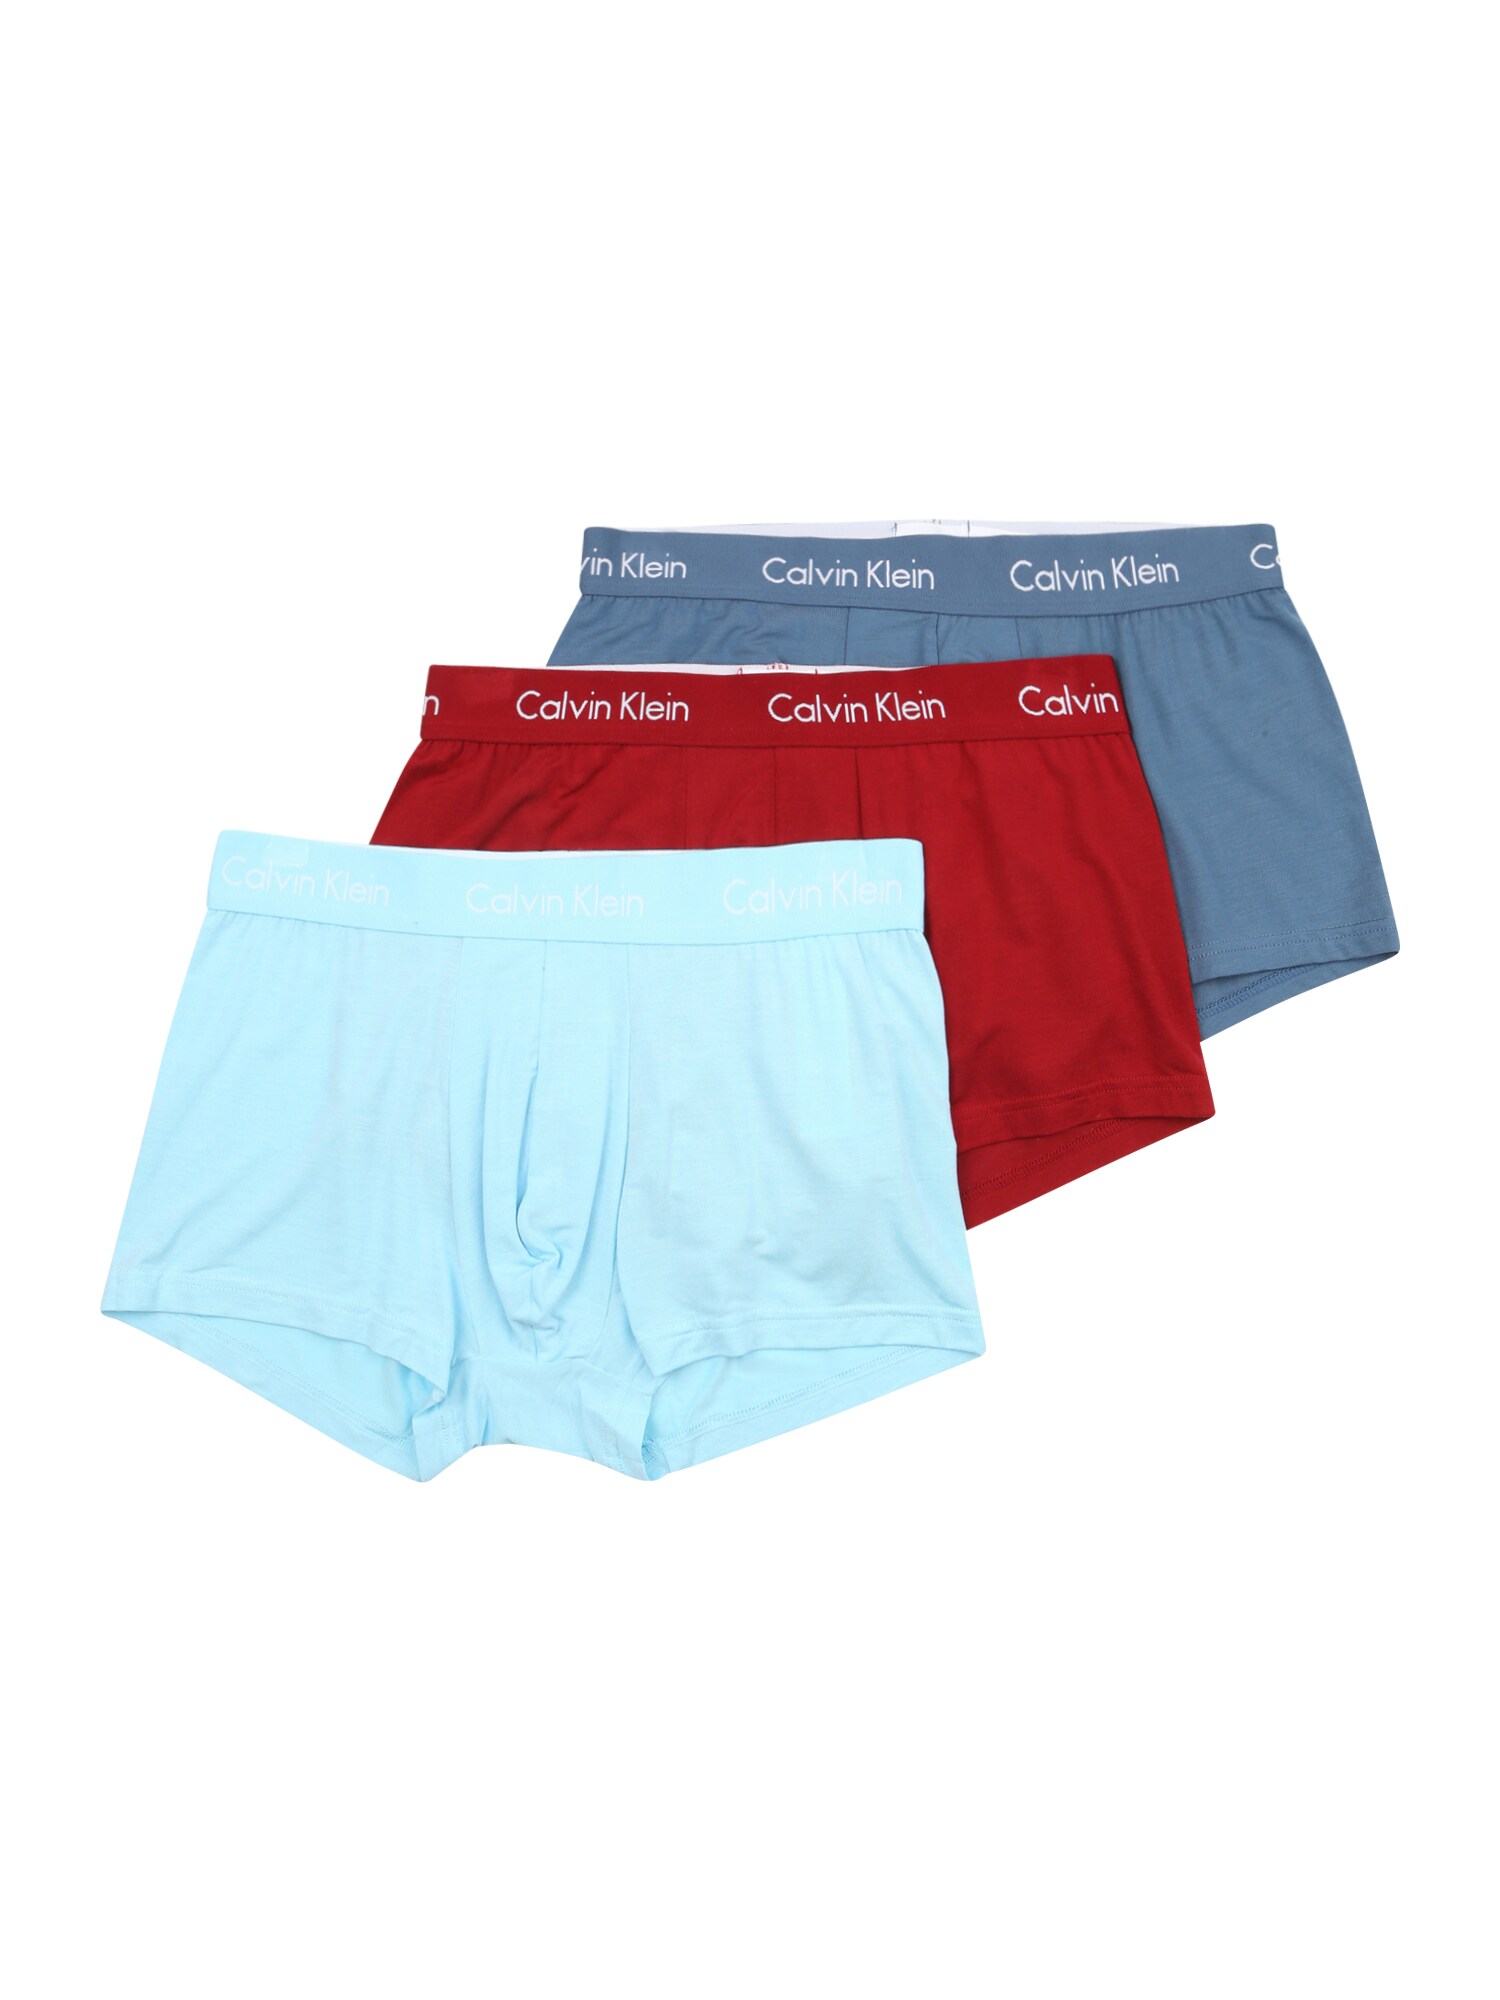 Calvin Klein Underwear Boxer trumpikės  raudona / azuro / balta / mėlyna dūmų spalva